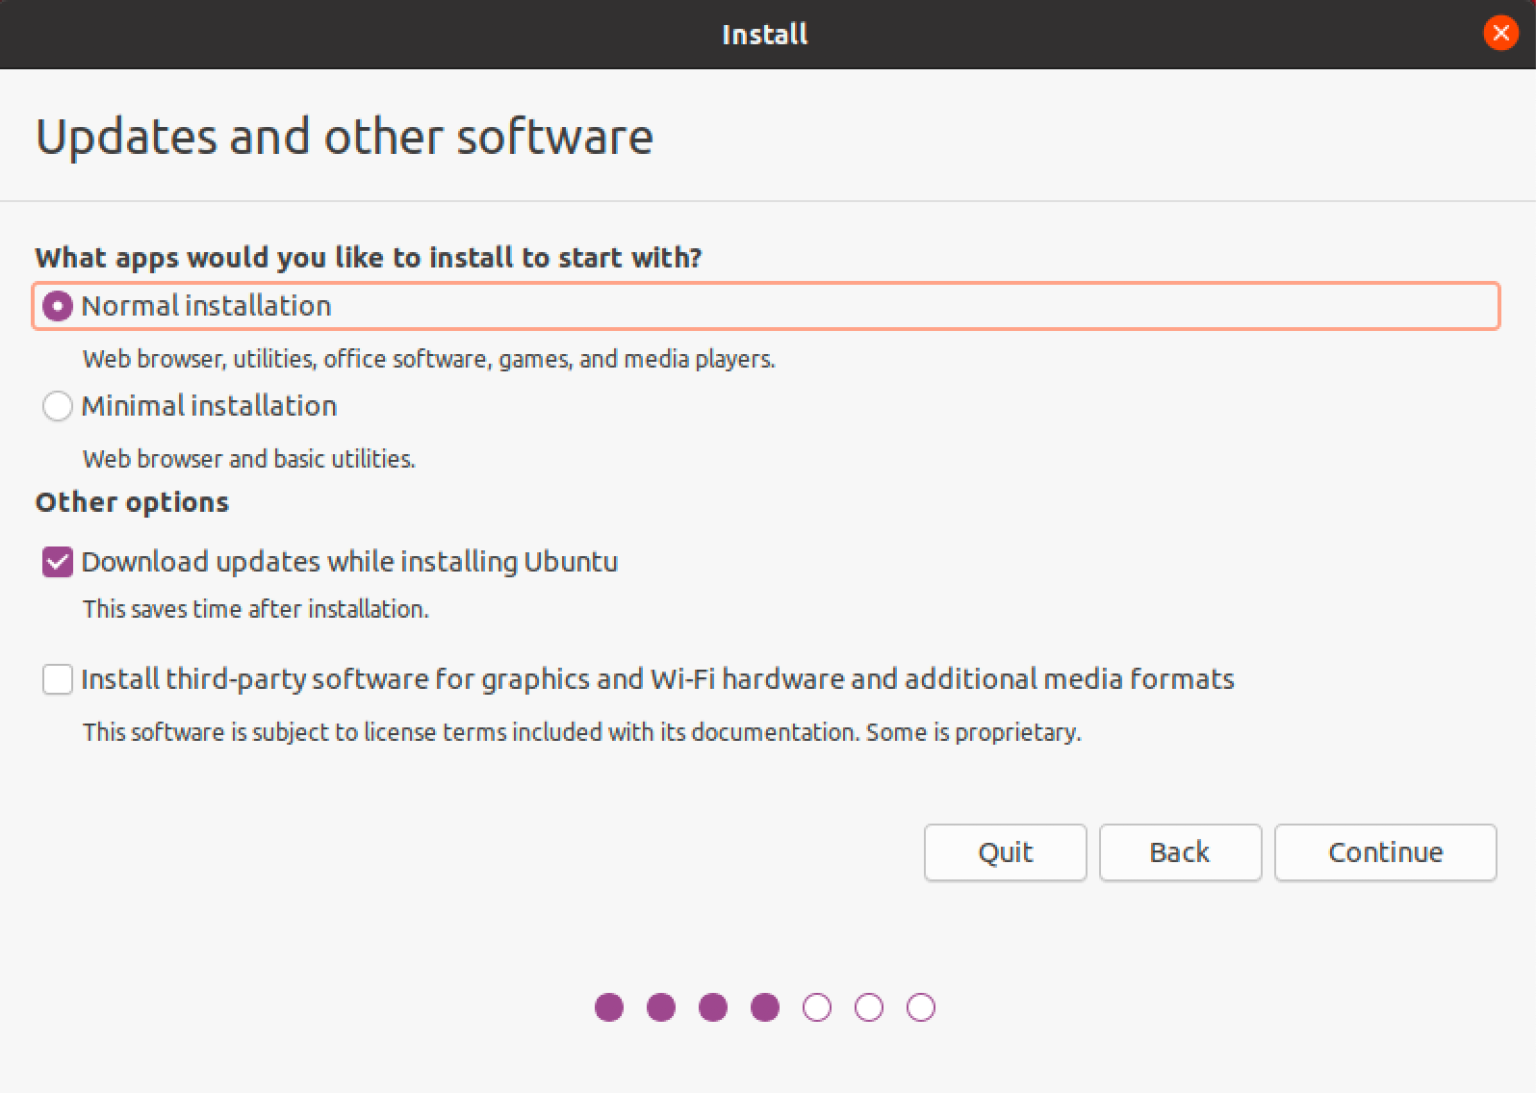 ubuntu install startup disk creator